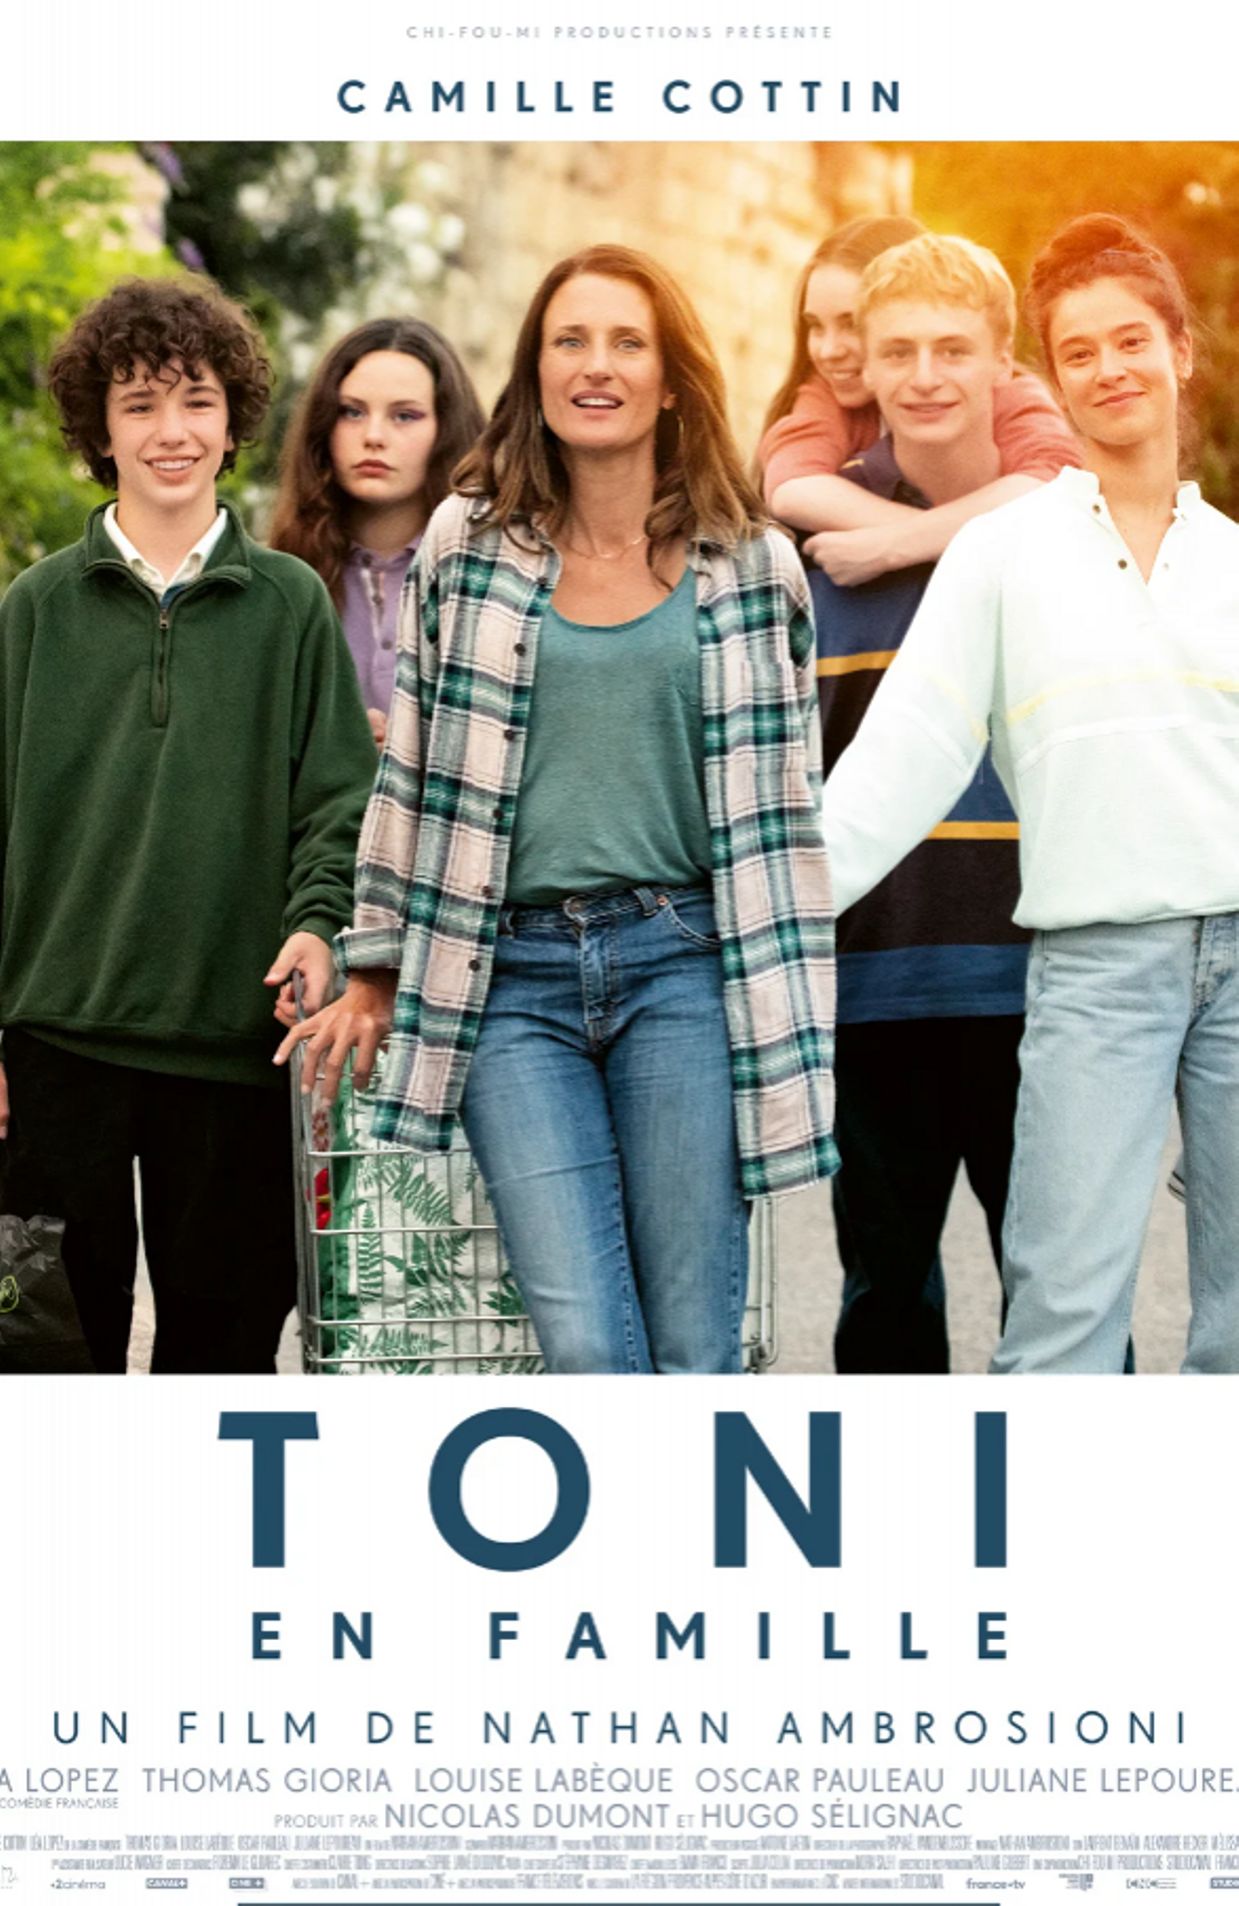 Toni en famille en DVD : Toni en famille DVD - AlloCiné